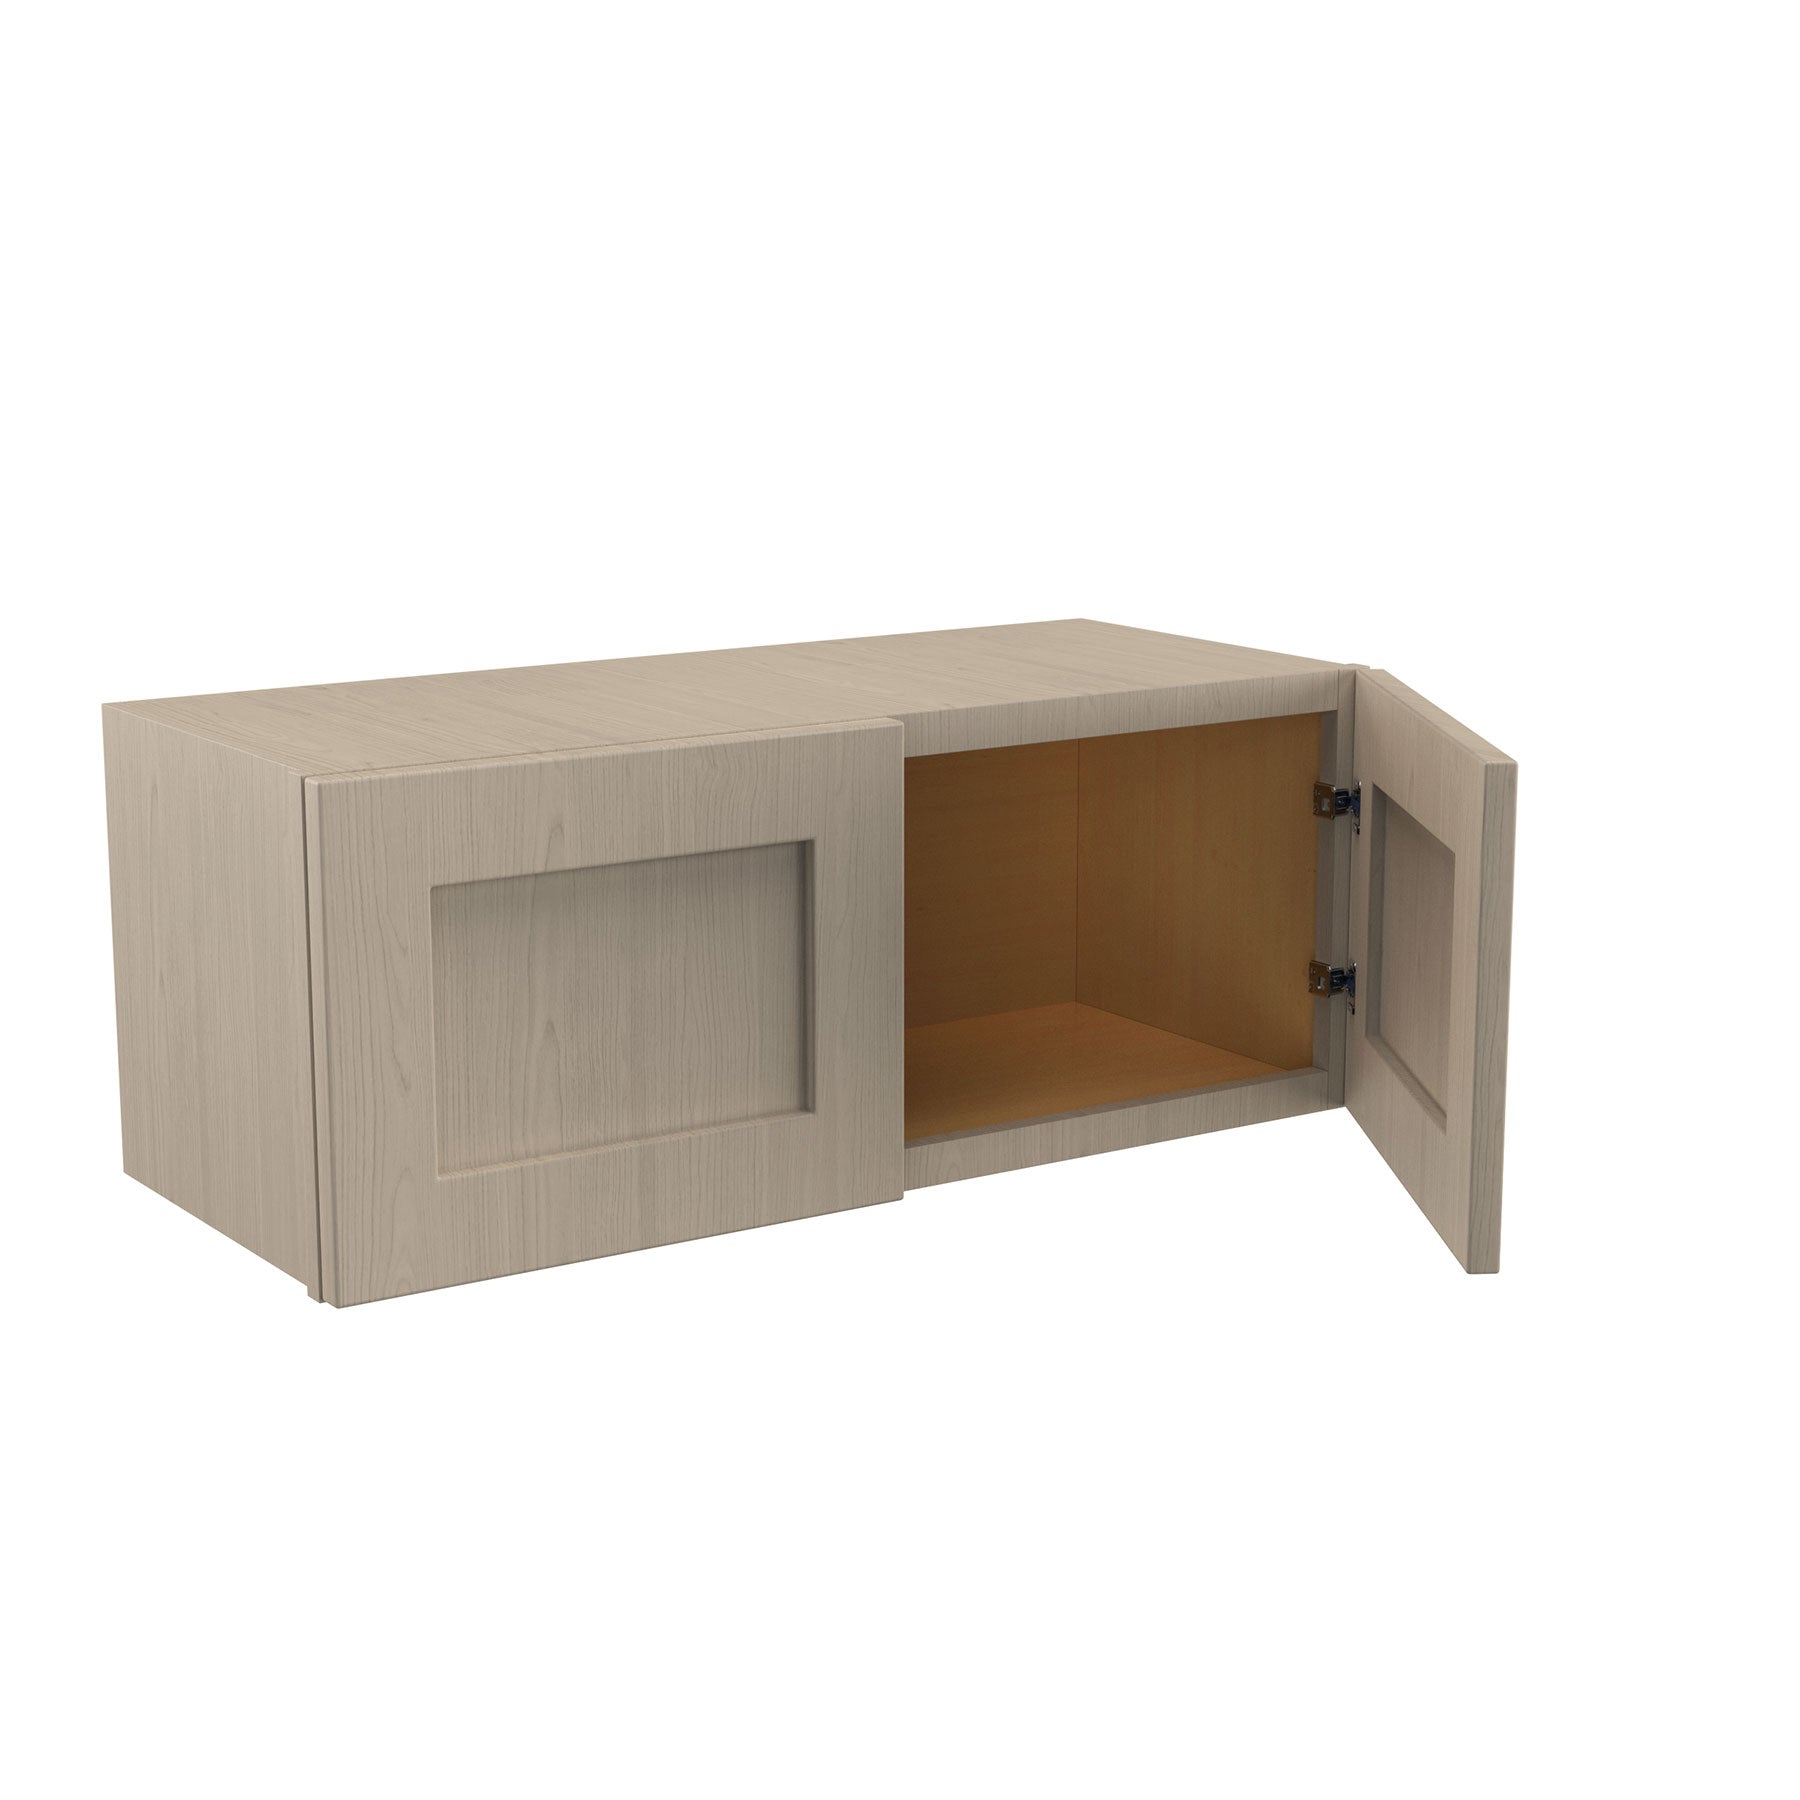 2 Door Wall Kitchen Cabinet | Elegant Stone | 30W x 12H x 12D